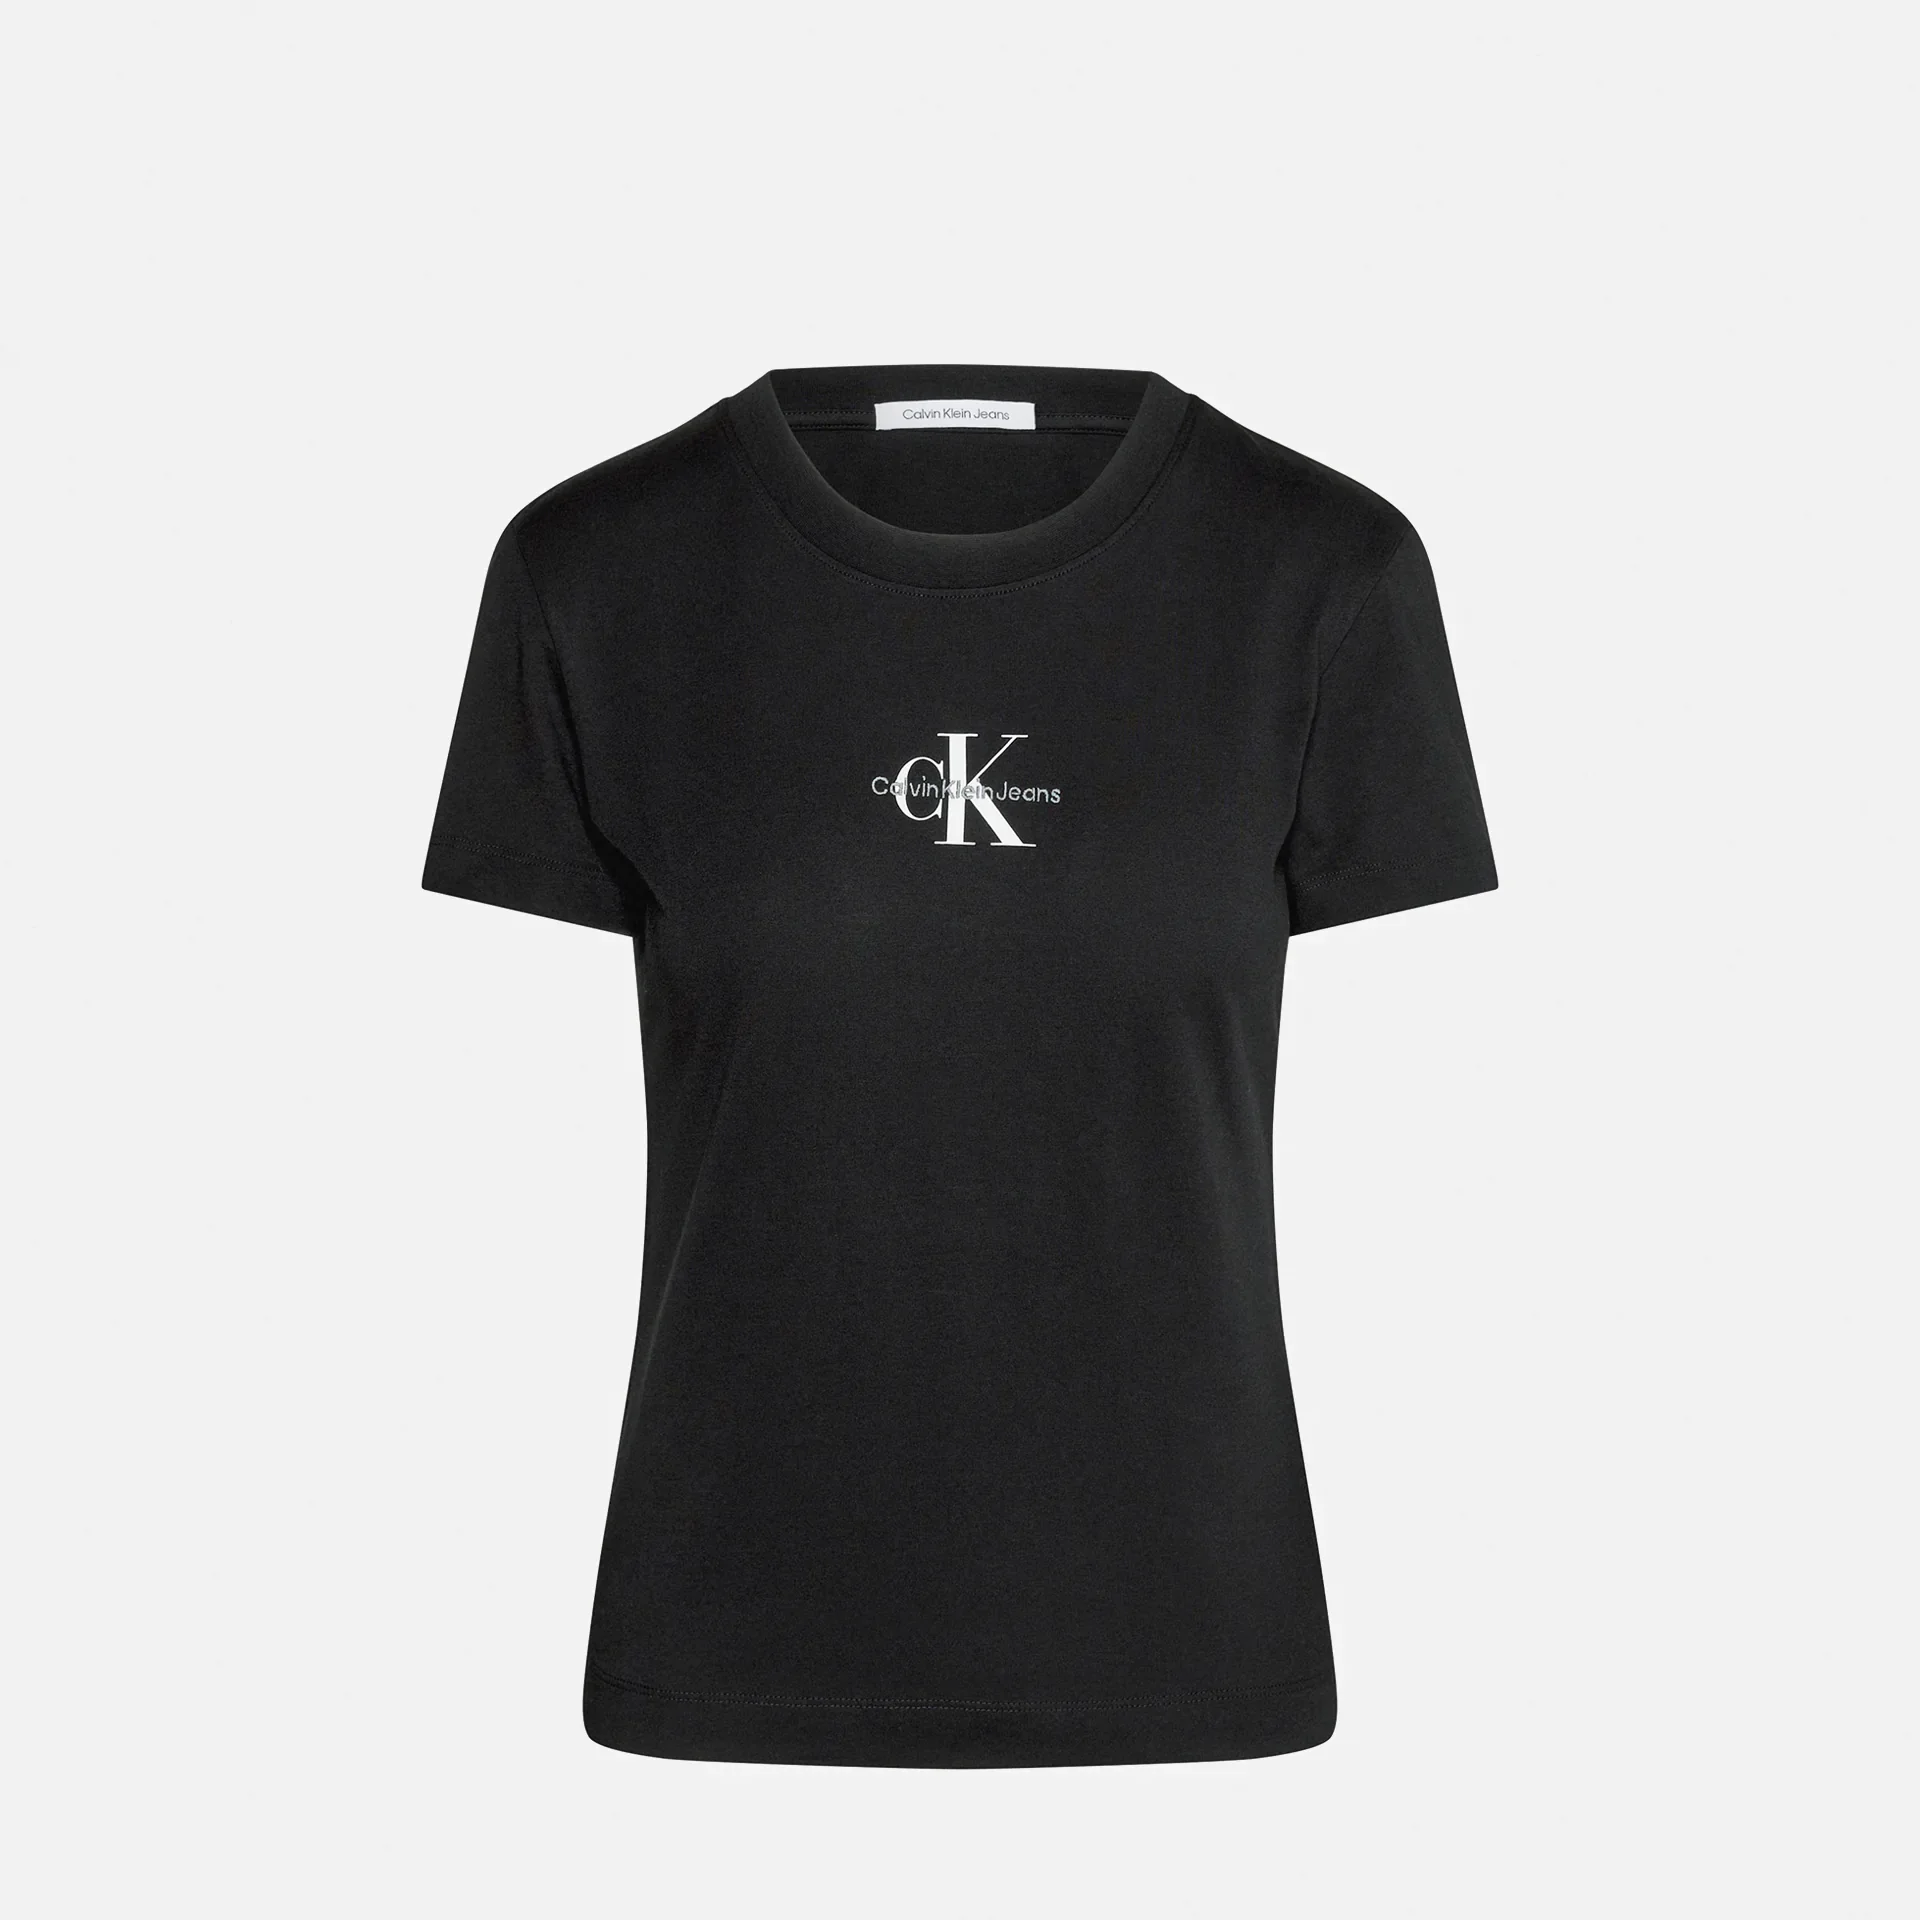 Calvin Klein Jeans Monologo Slim T-Shirt Black